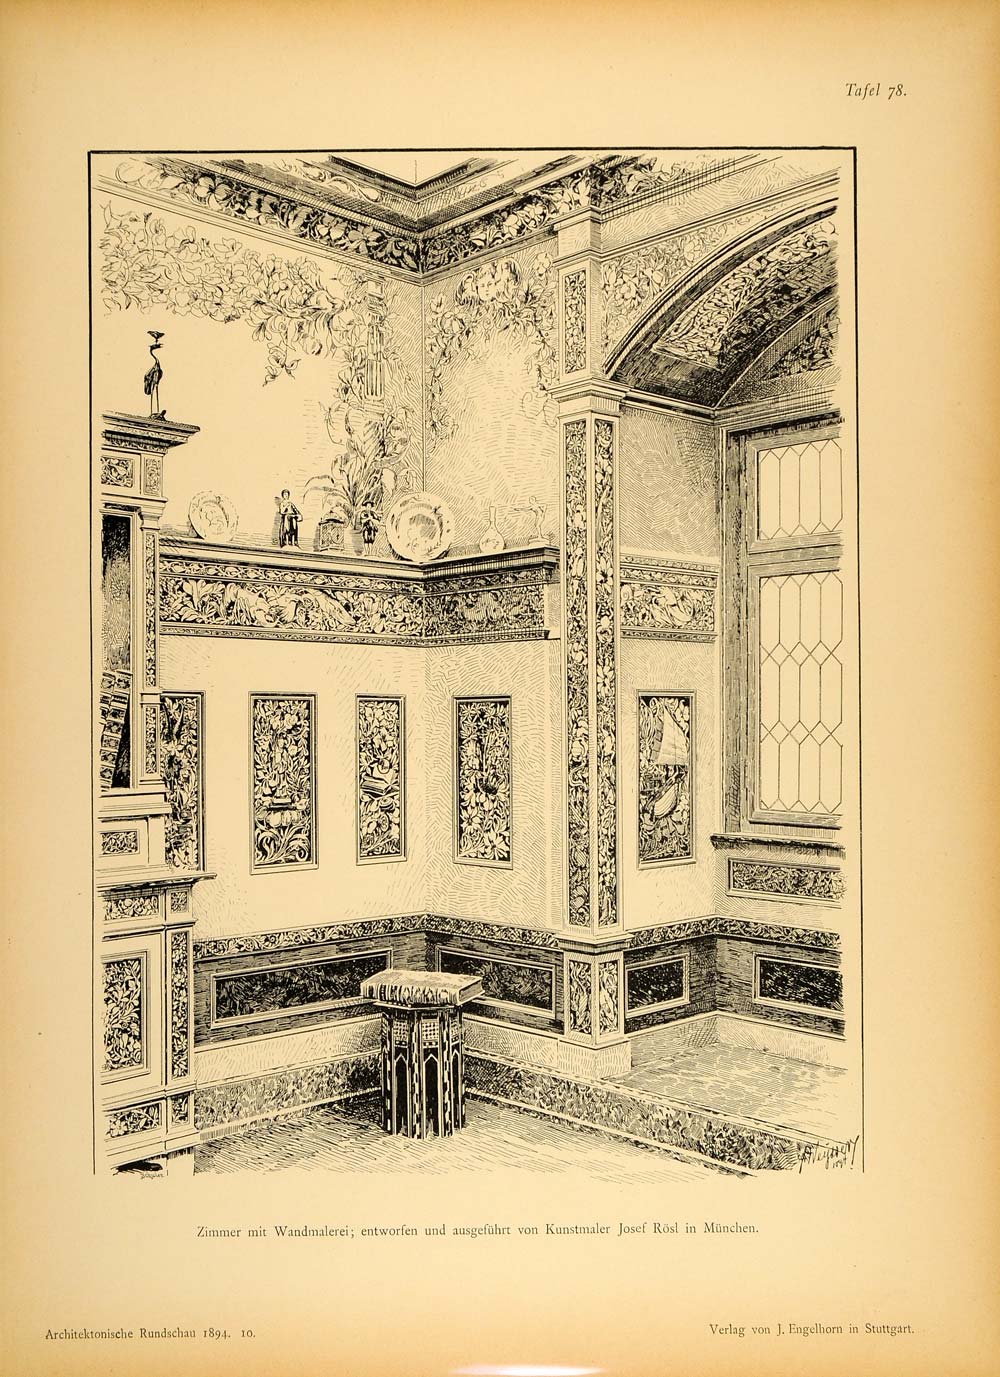 1894 Wall Painting Room Decorative Josef Rosl Print - ORIGINAL HISTORIC ARC2